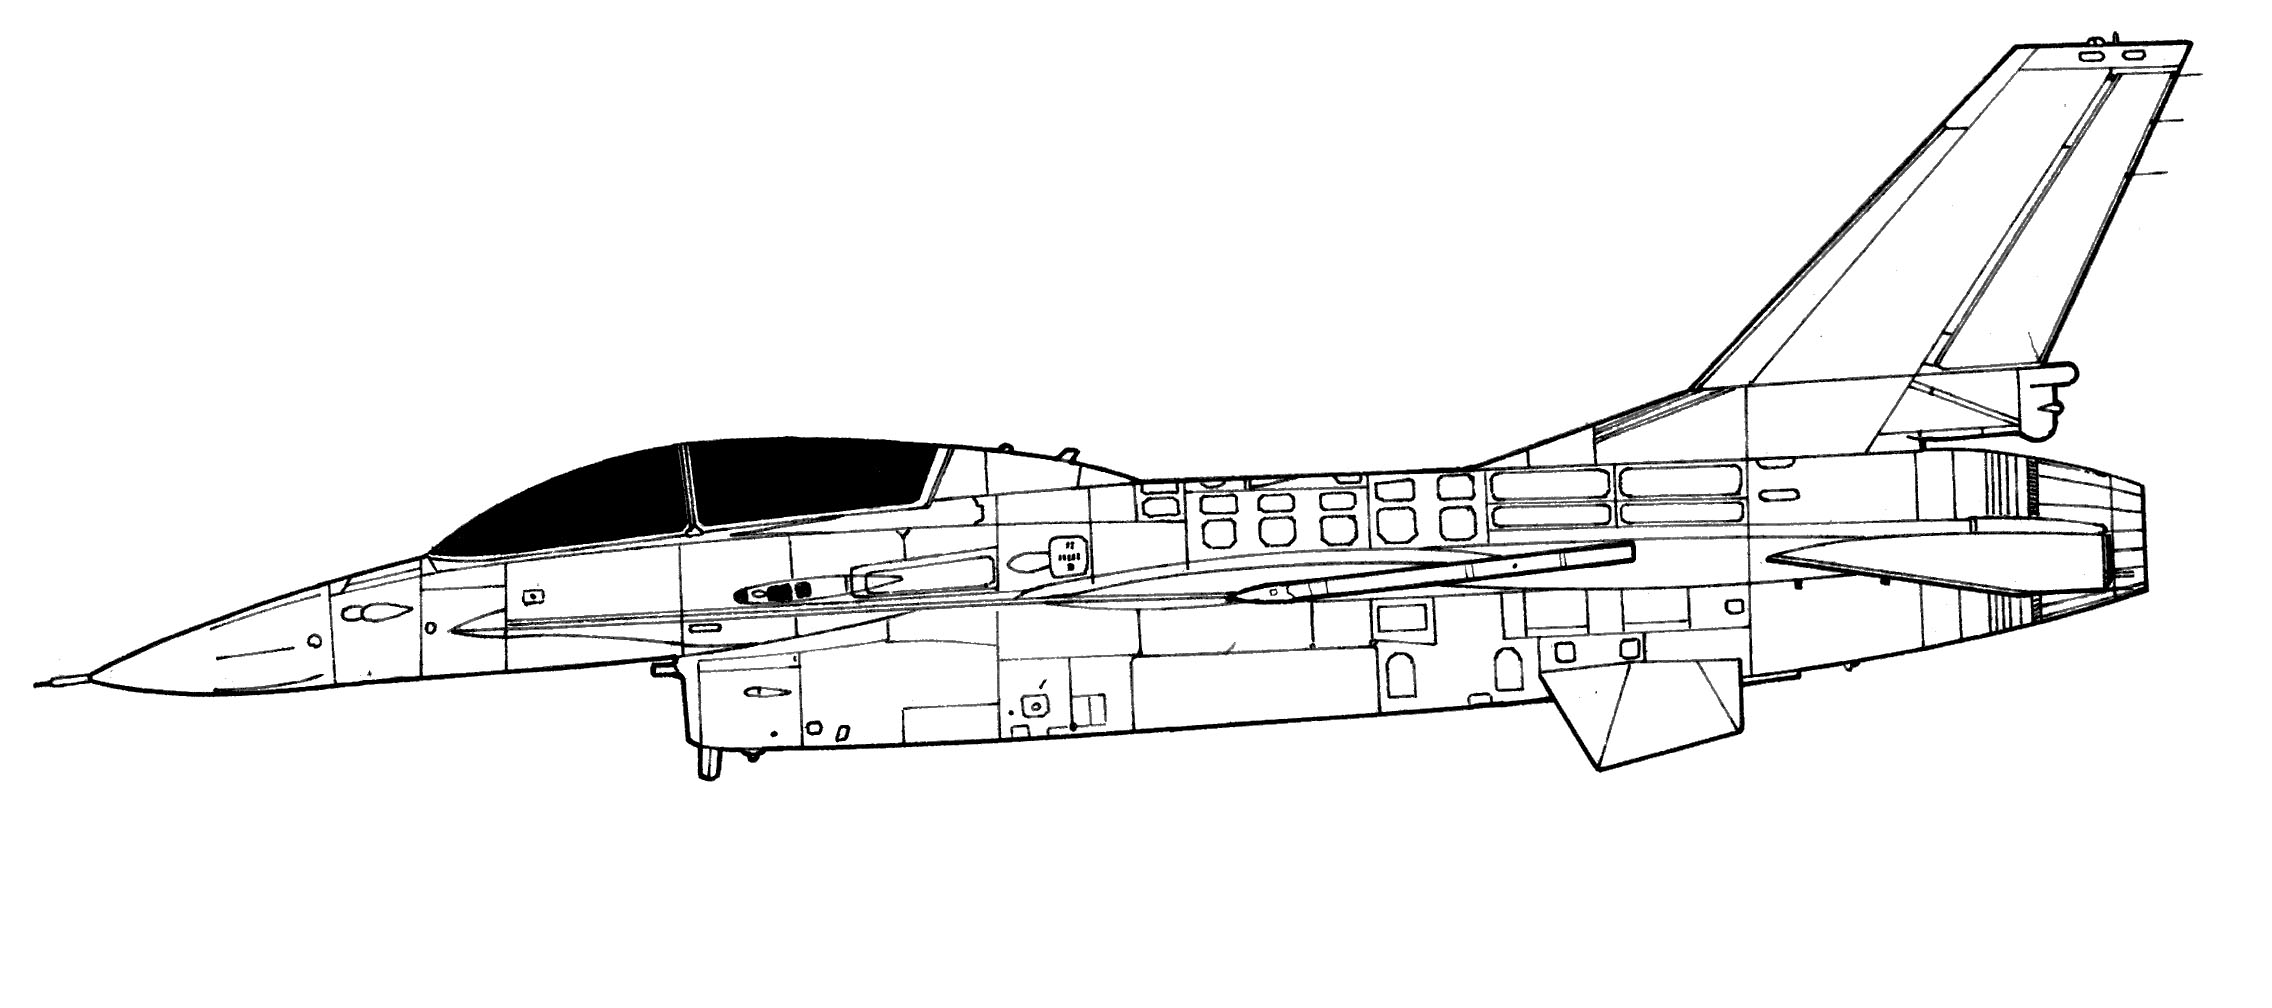 F-16 Fighting Falcon blueprint